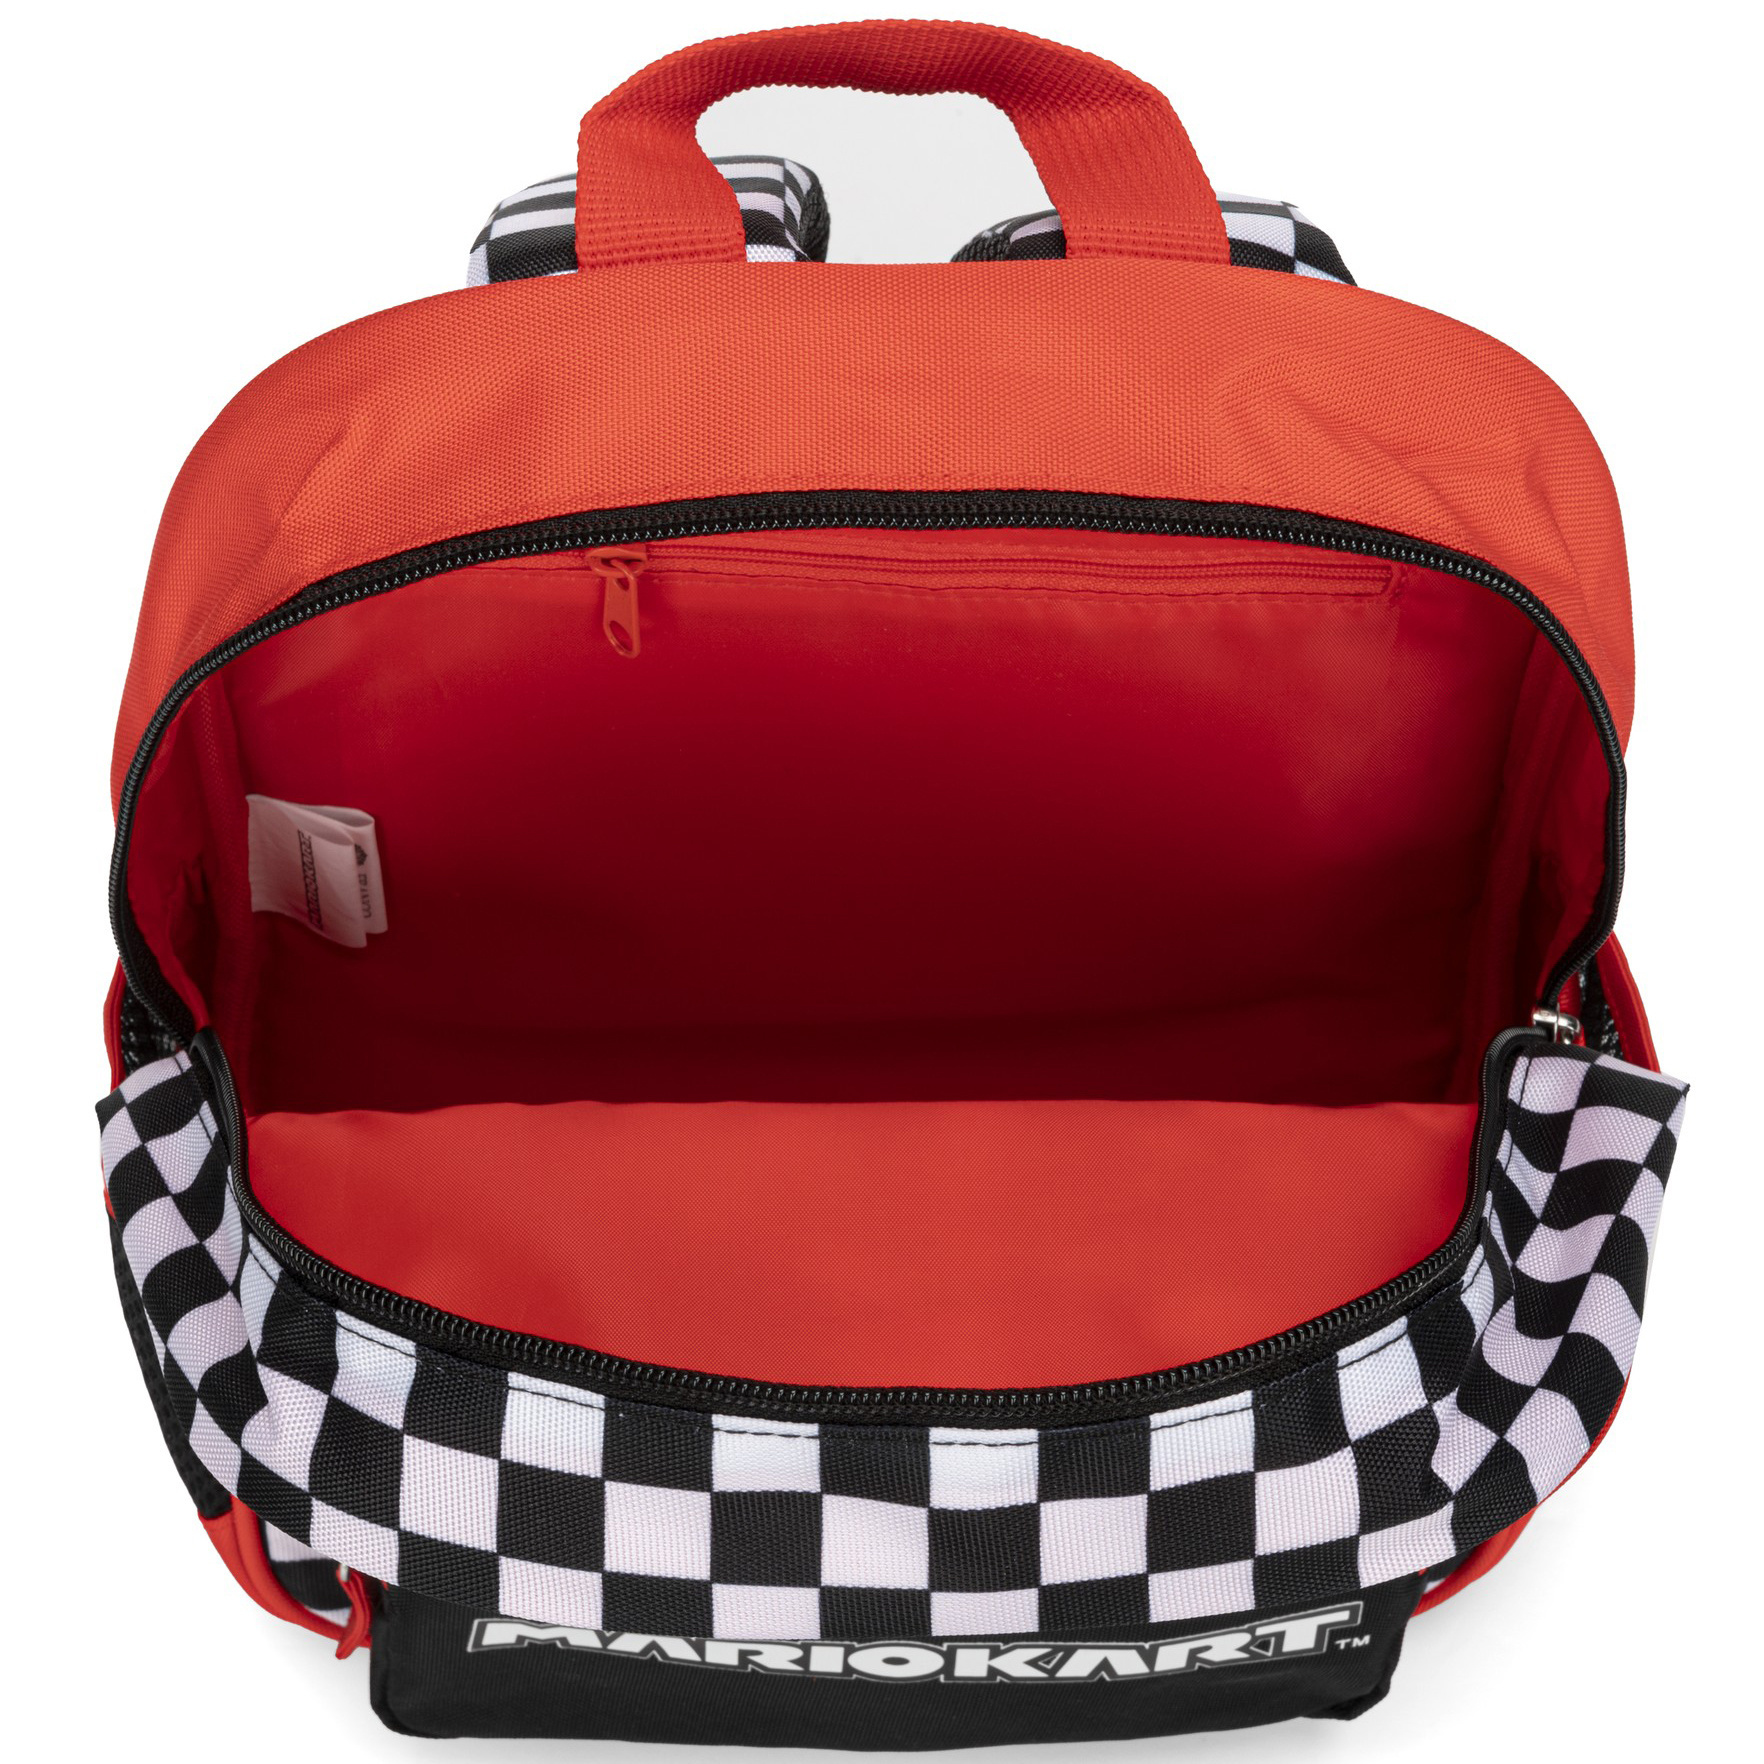 Super Mario Toddler backpack, Mariokart - 30 x 23 x 14 cm - Polyester